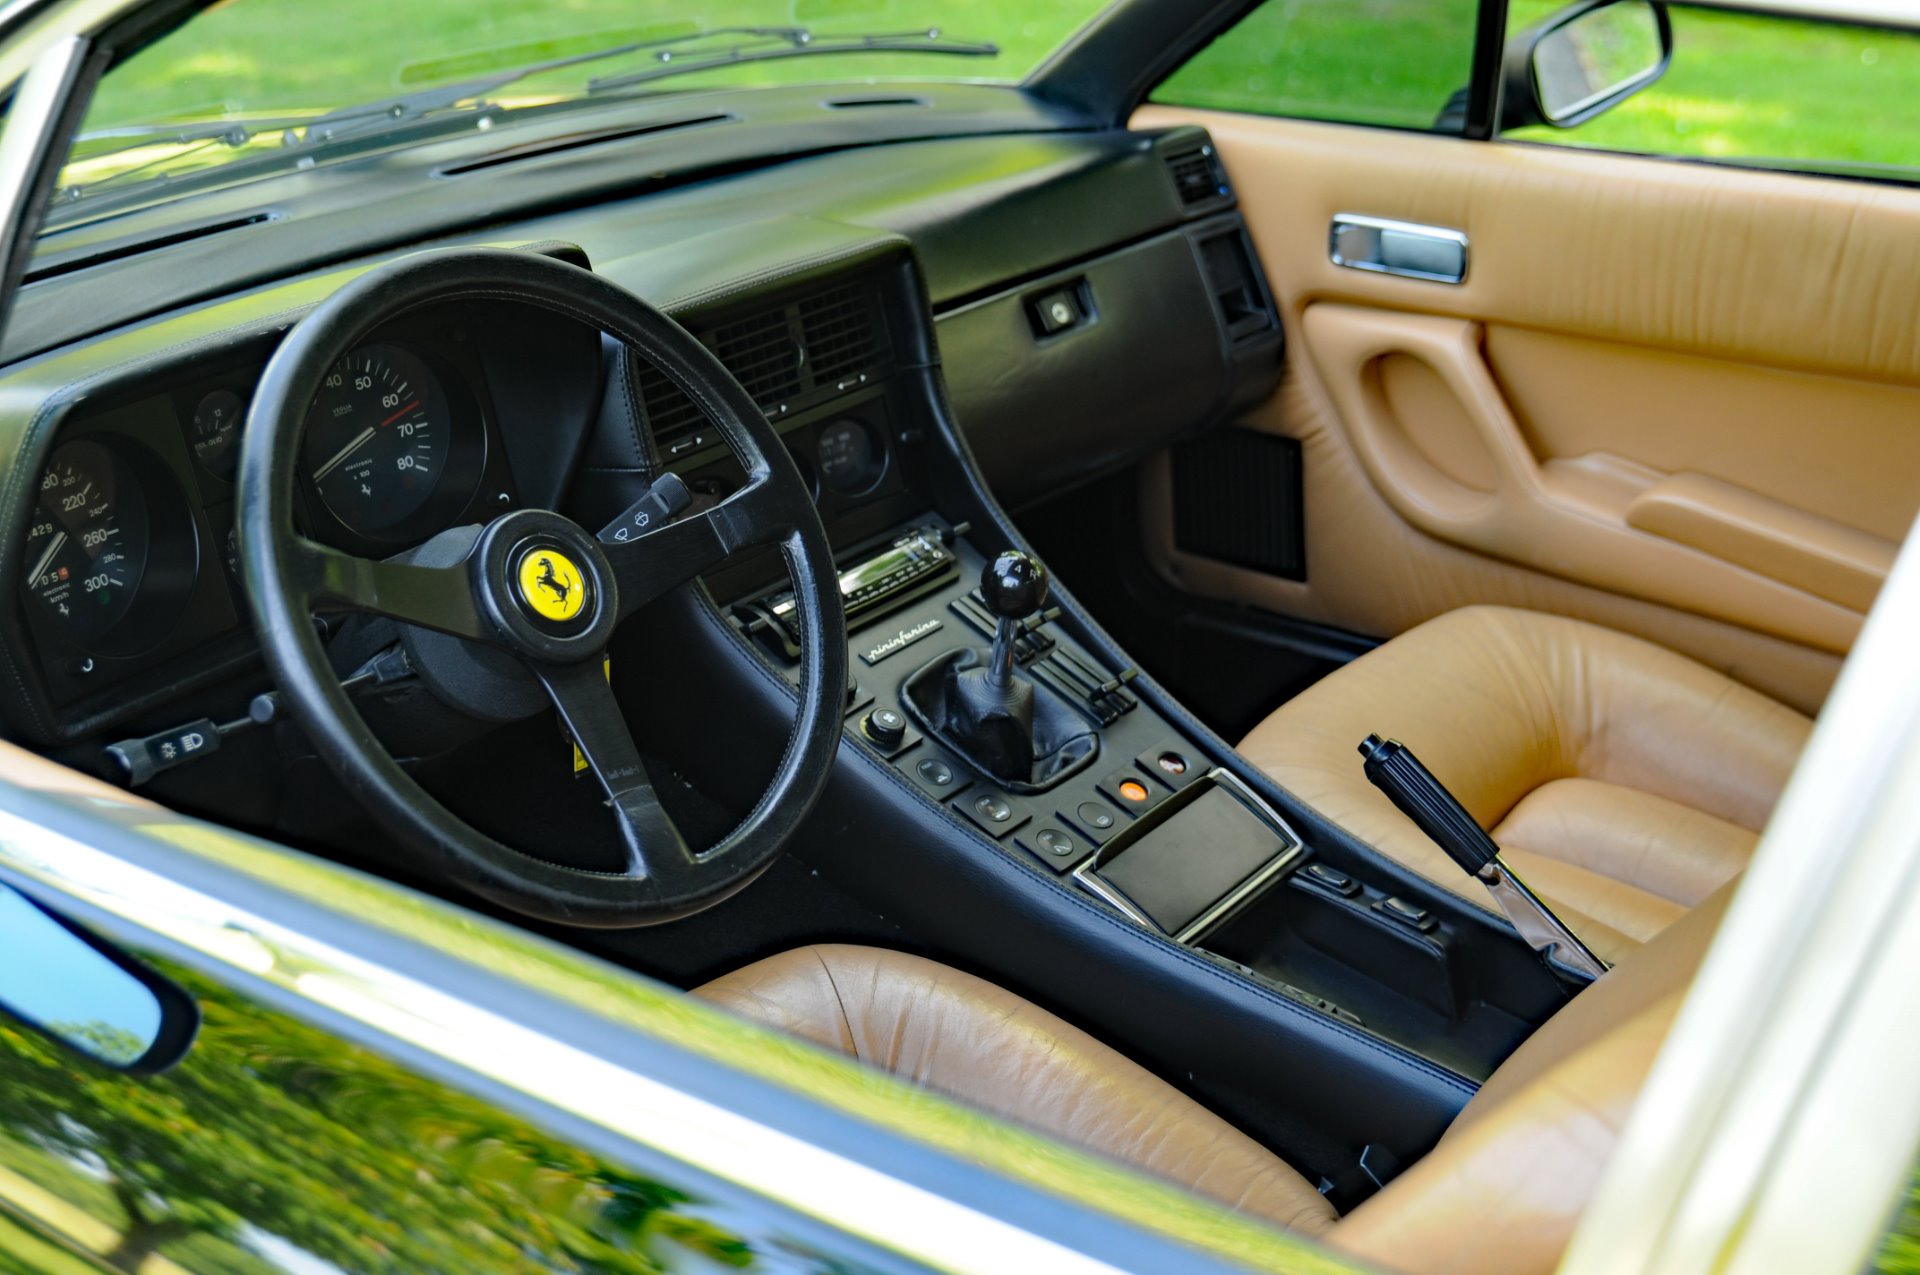 Used 1983 Ferrari 400i 5 Speed Manual Transmission For Sale ($74,900) | Ambassador Automobile ...